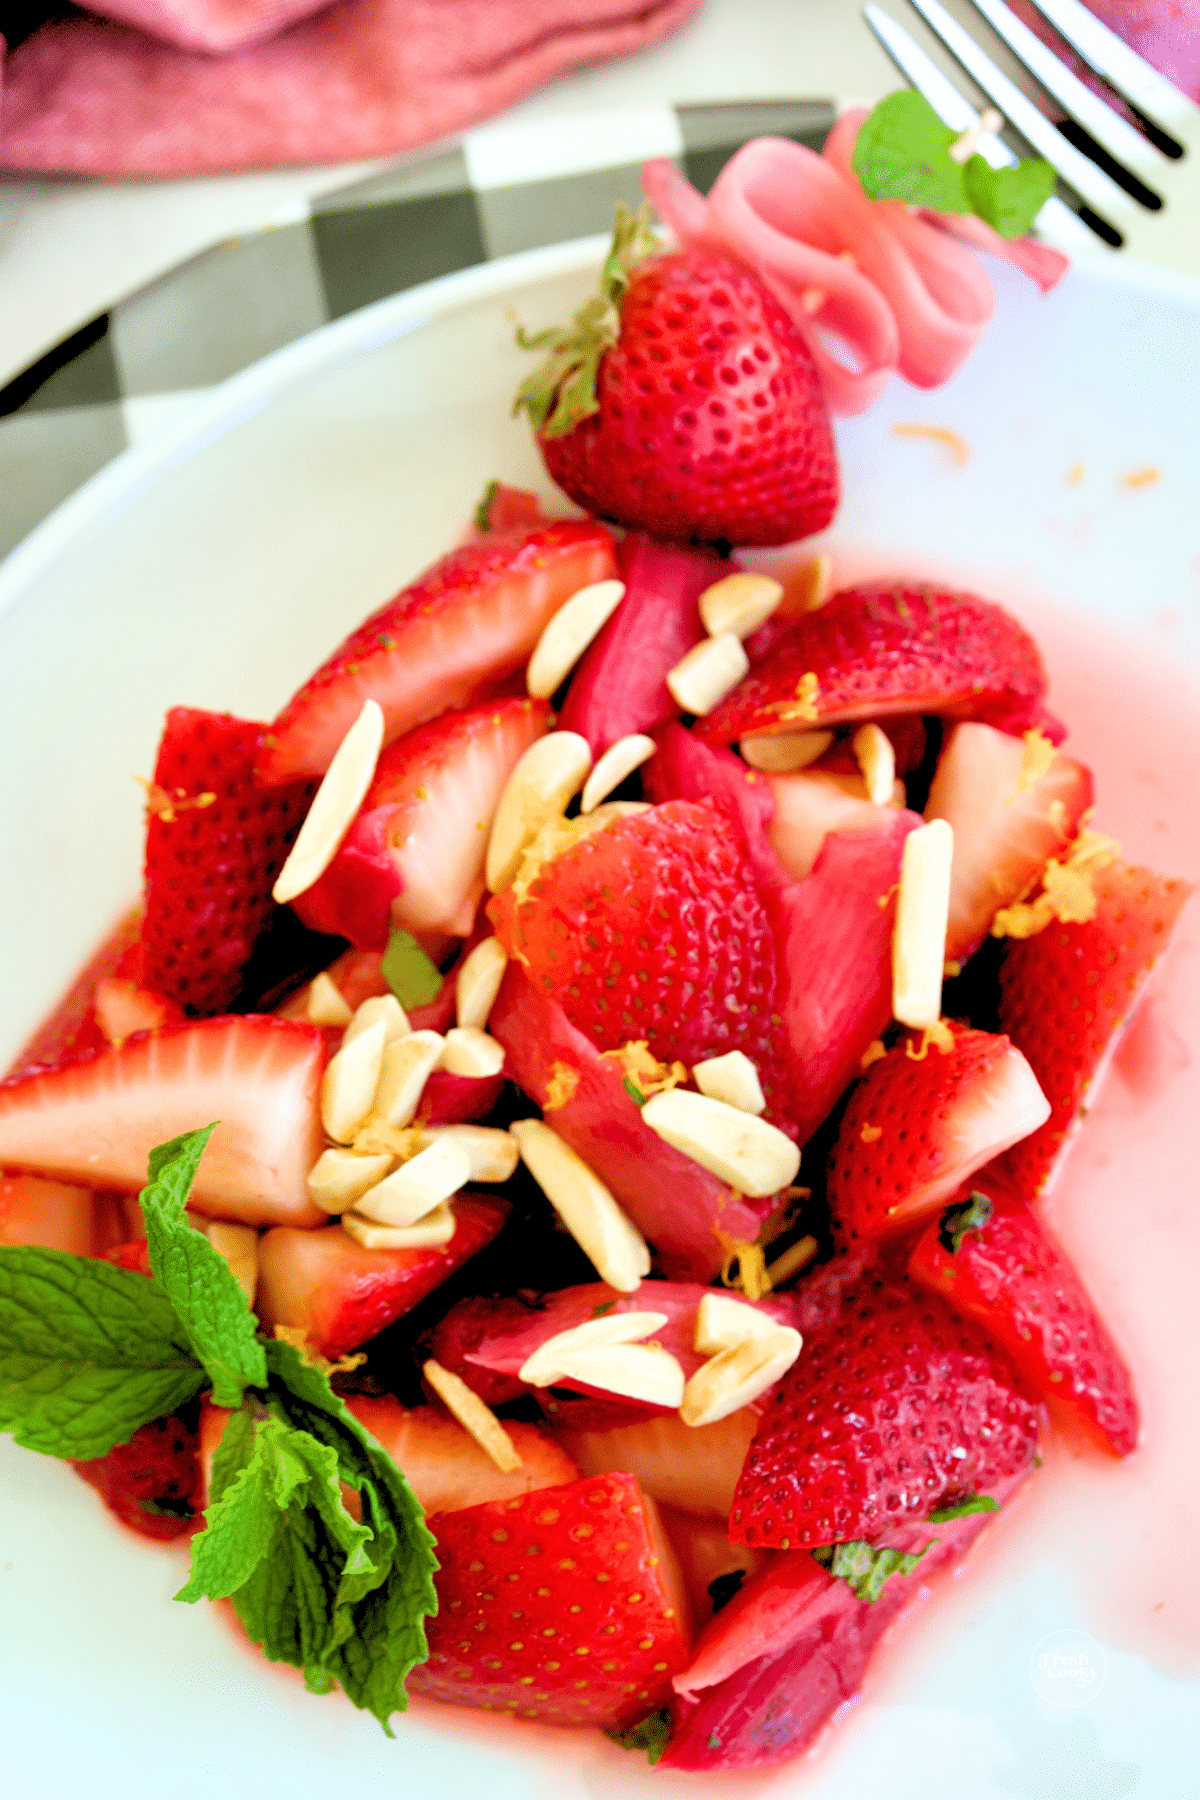 Strawberry Rhubarb Salad on plate with mint garnish.